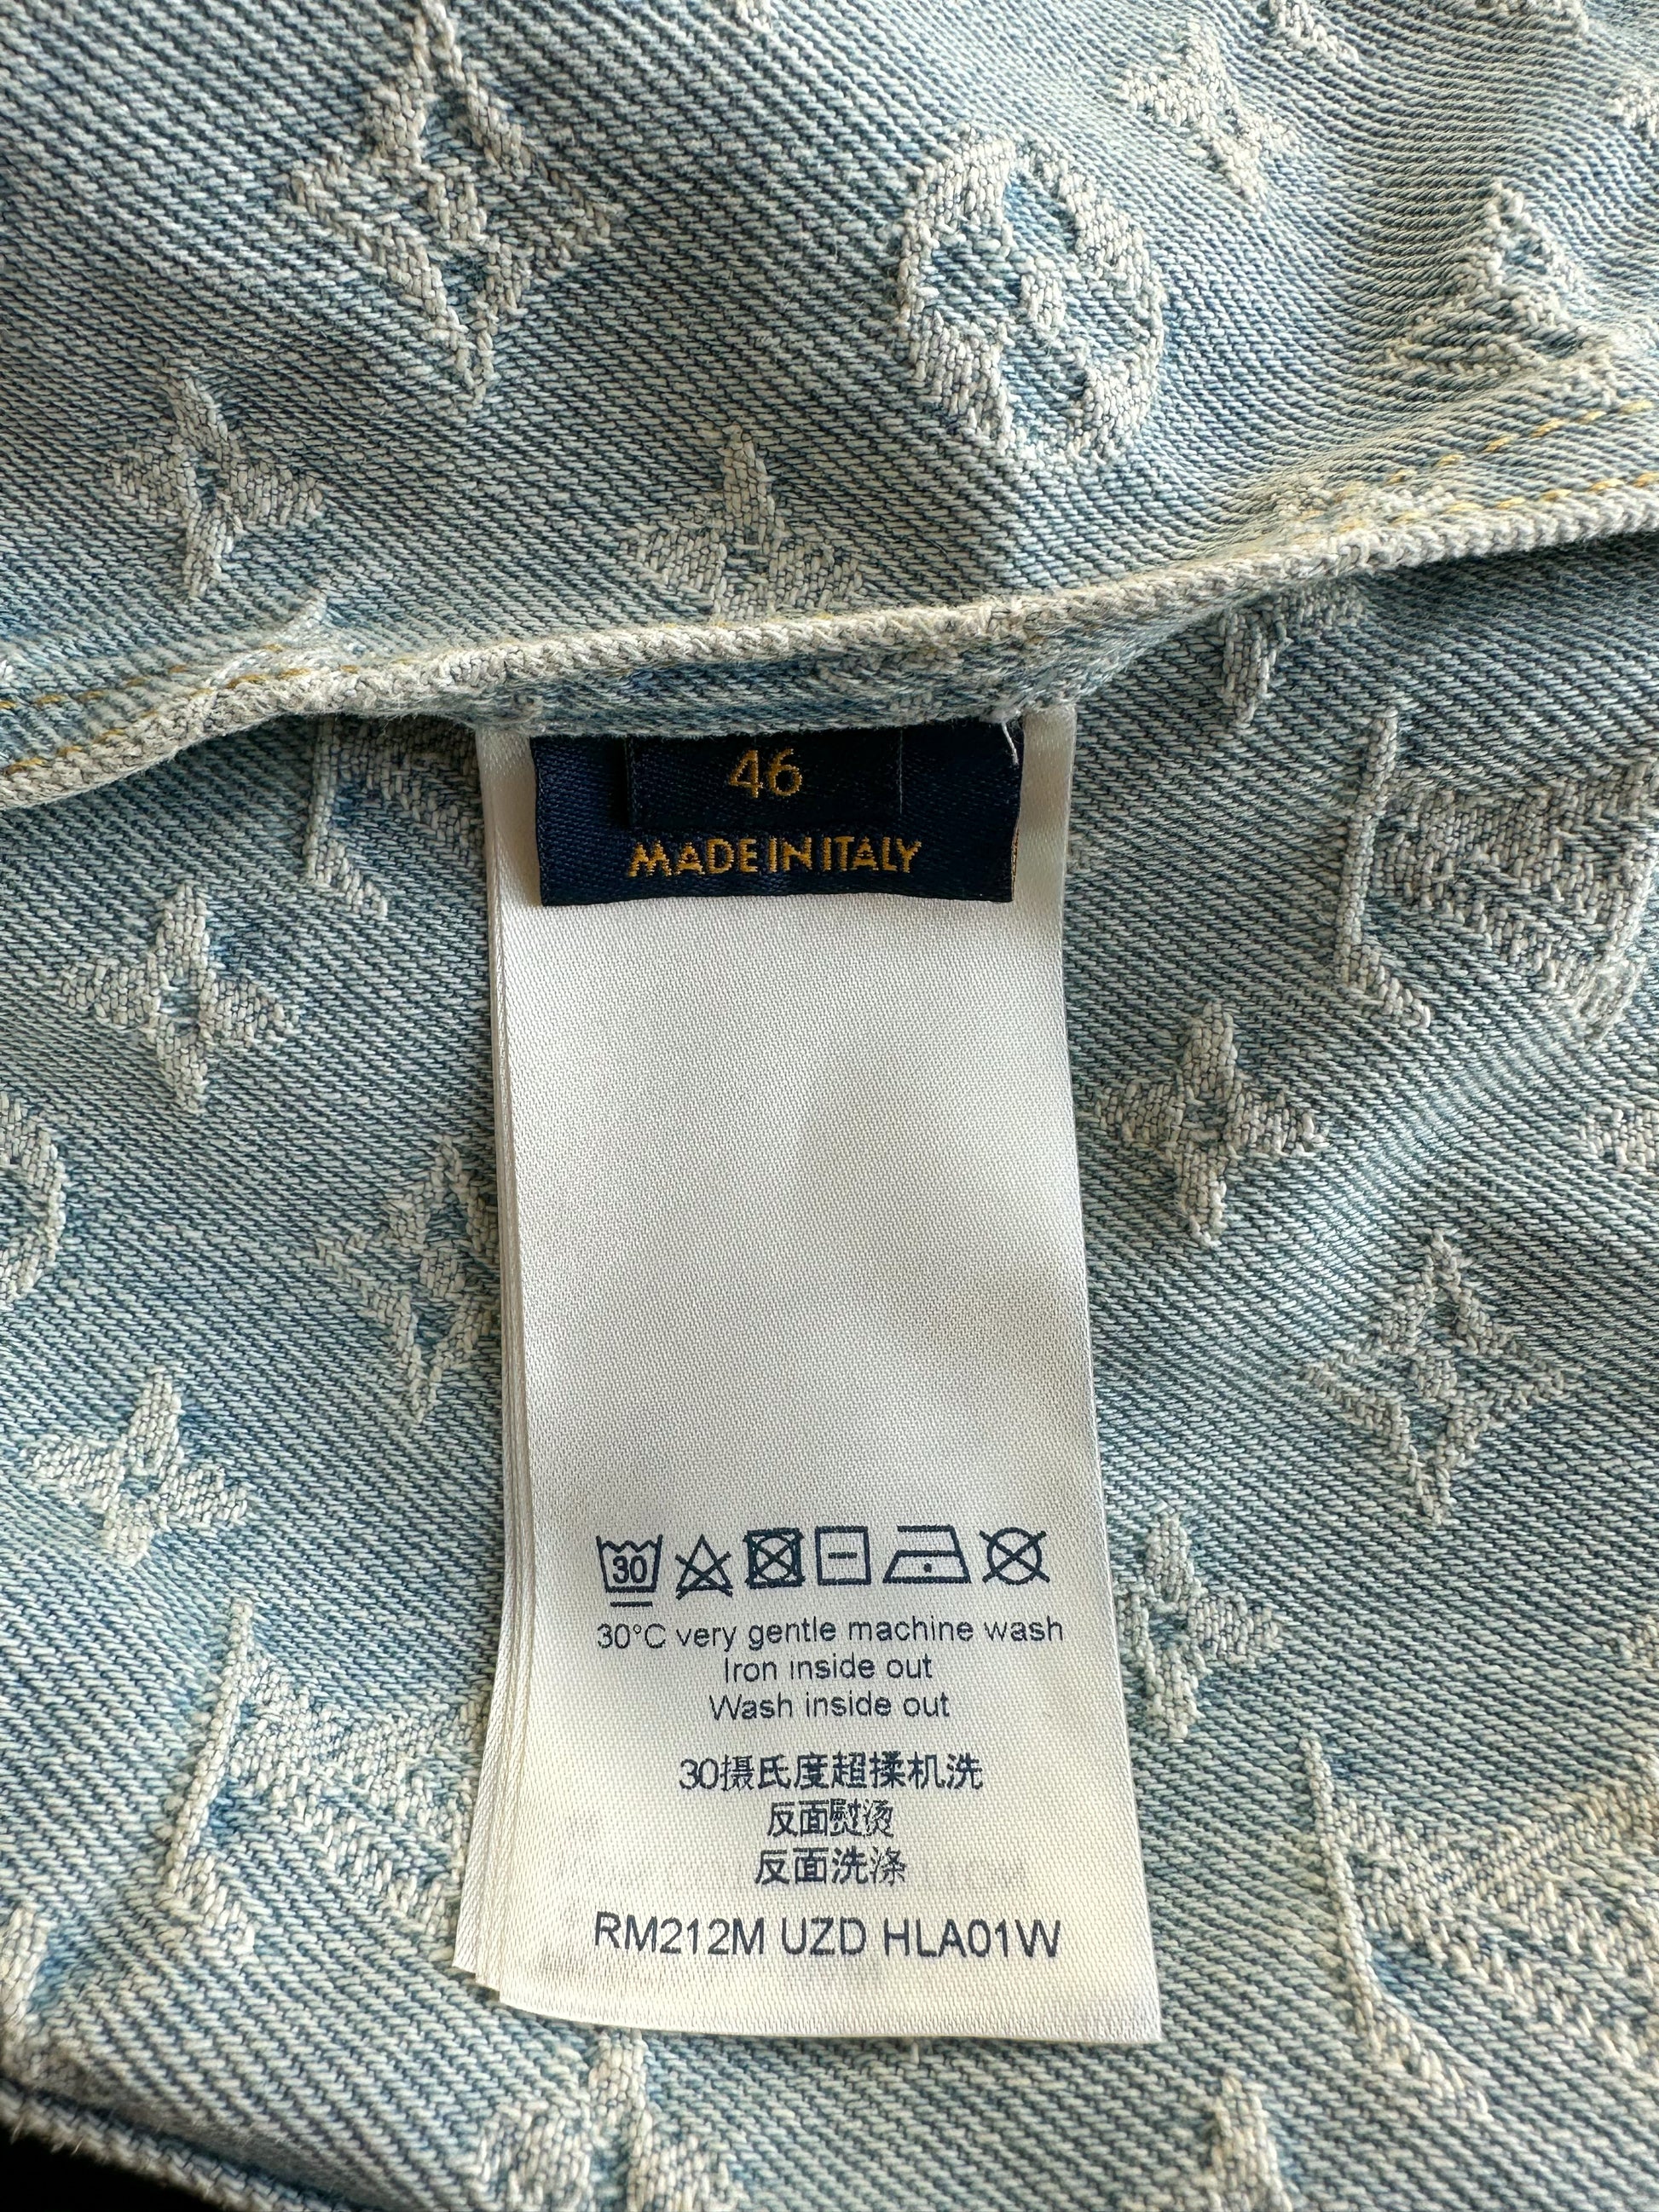 Louis Vuitton × NBA Monogram Patches Zip Up Blouson Sweater Jacket